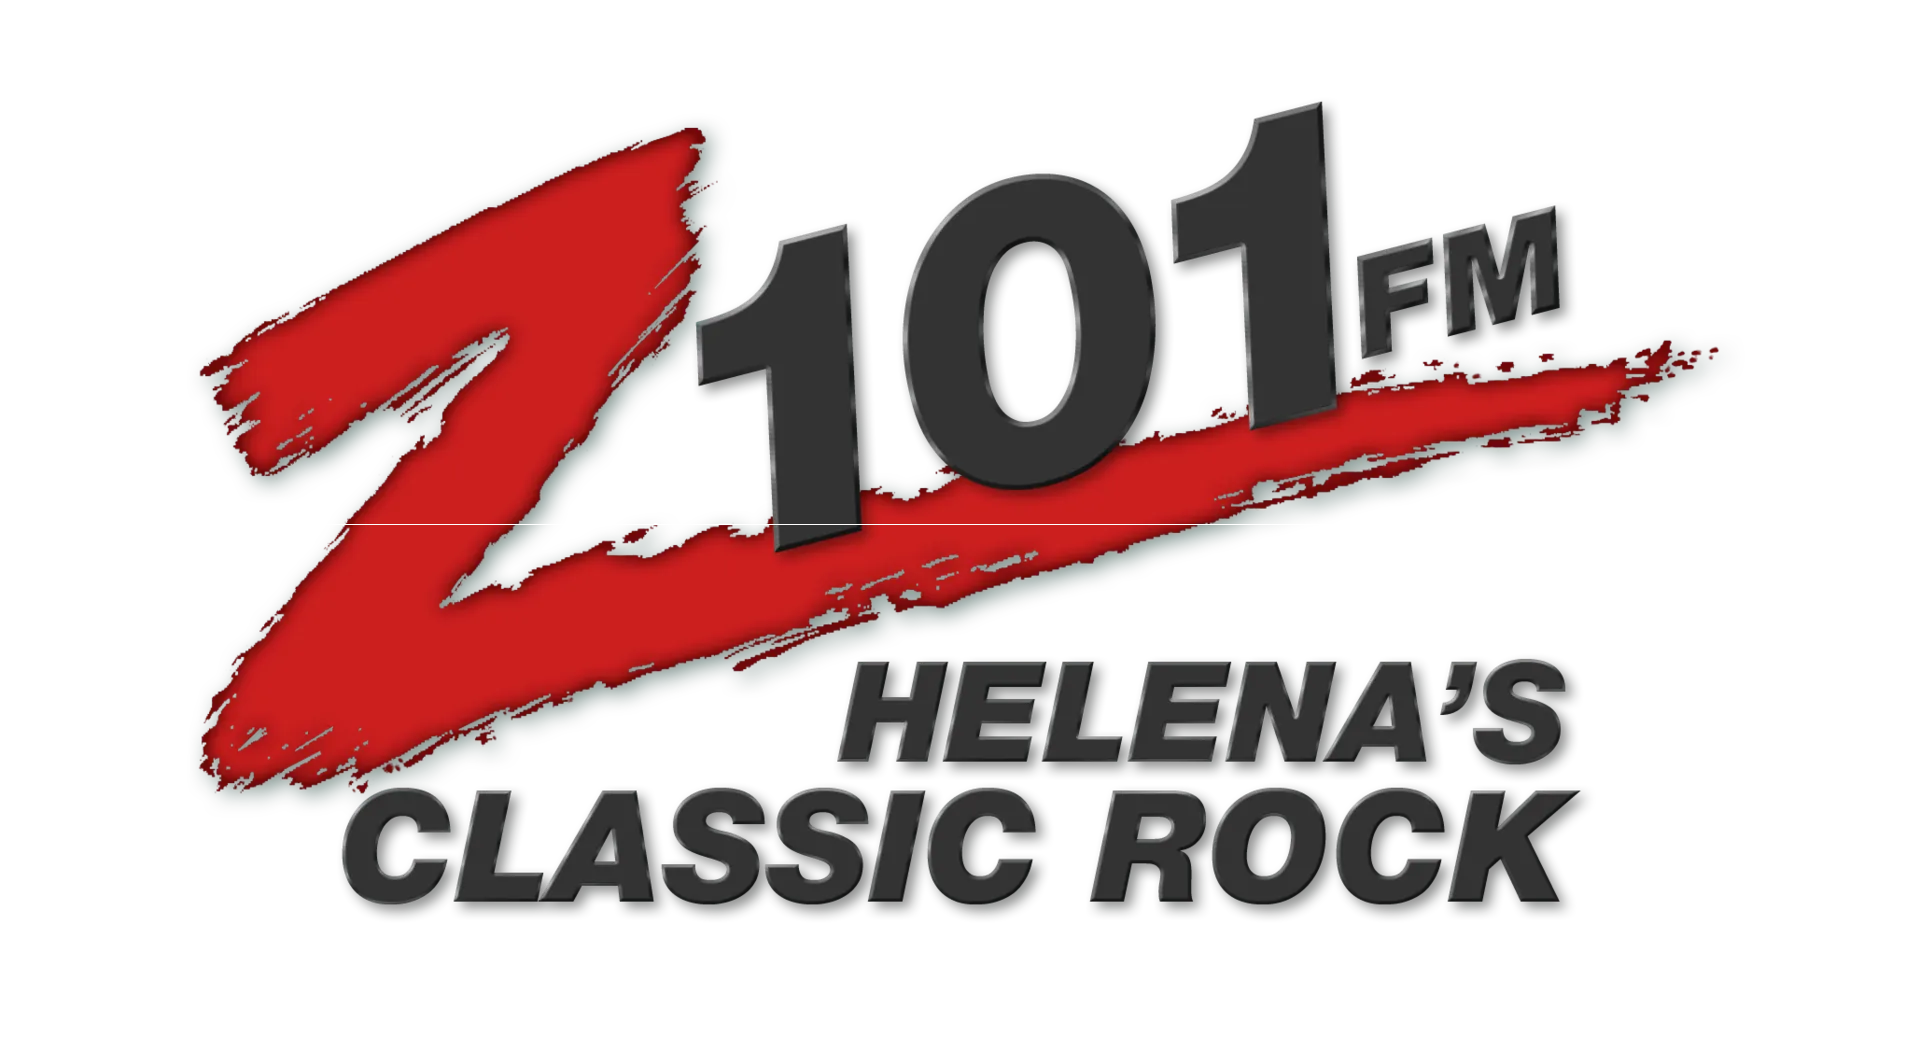 Z 101 FM Logo